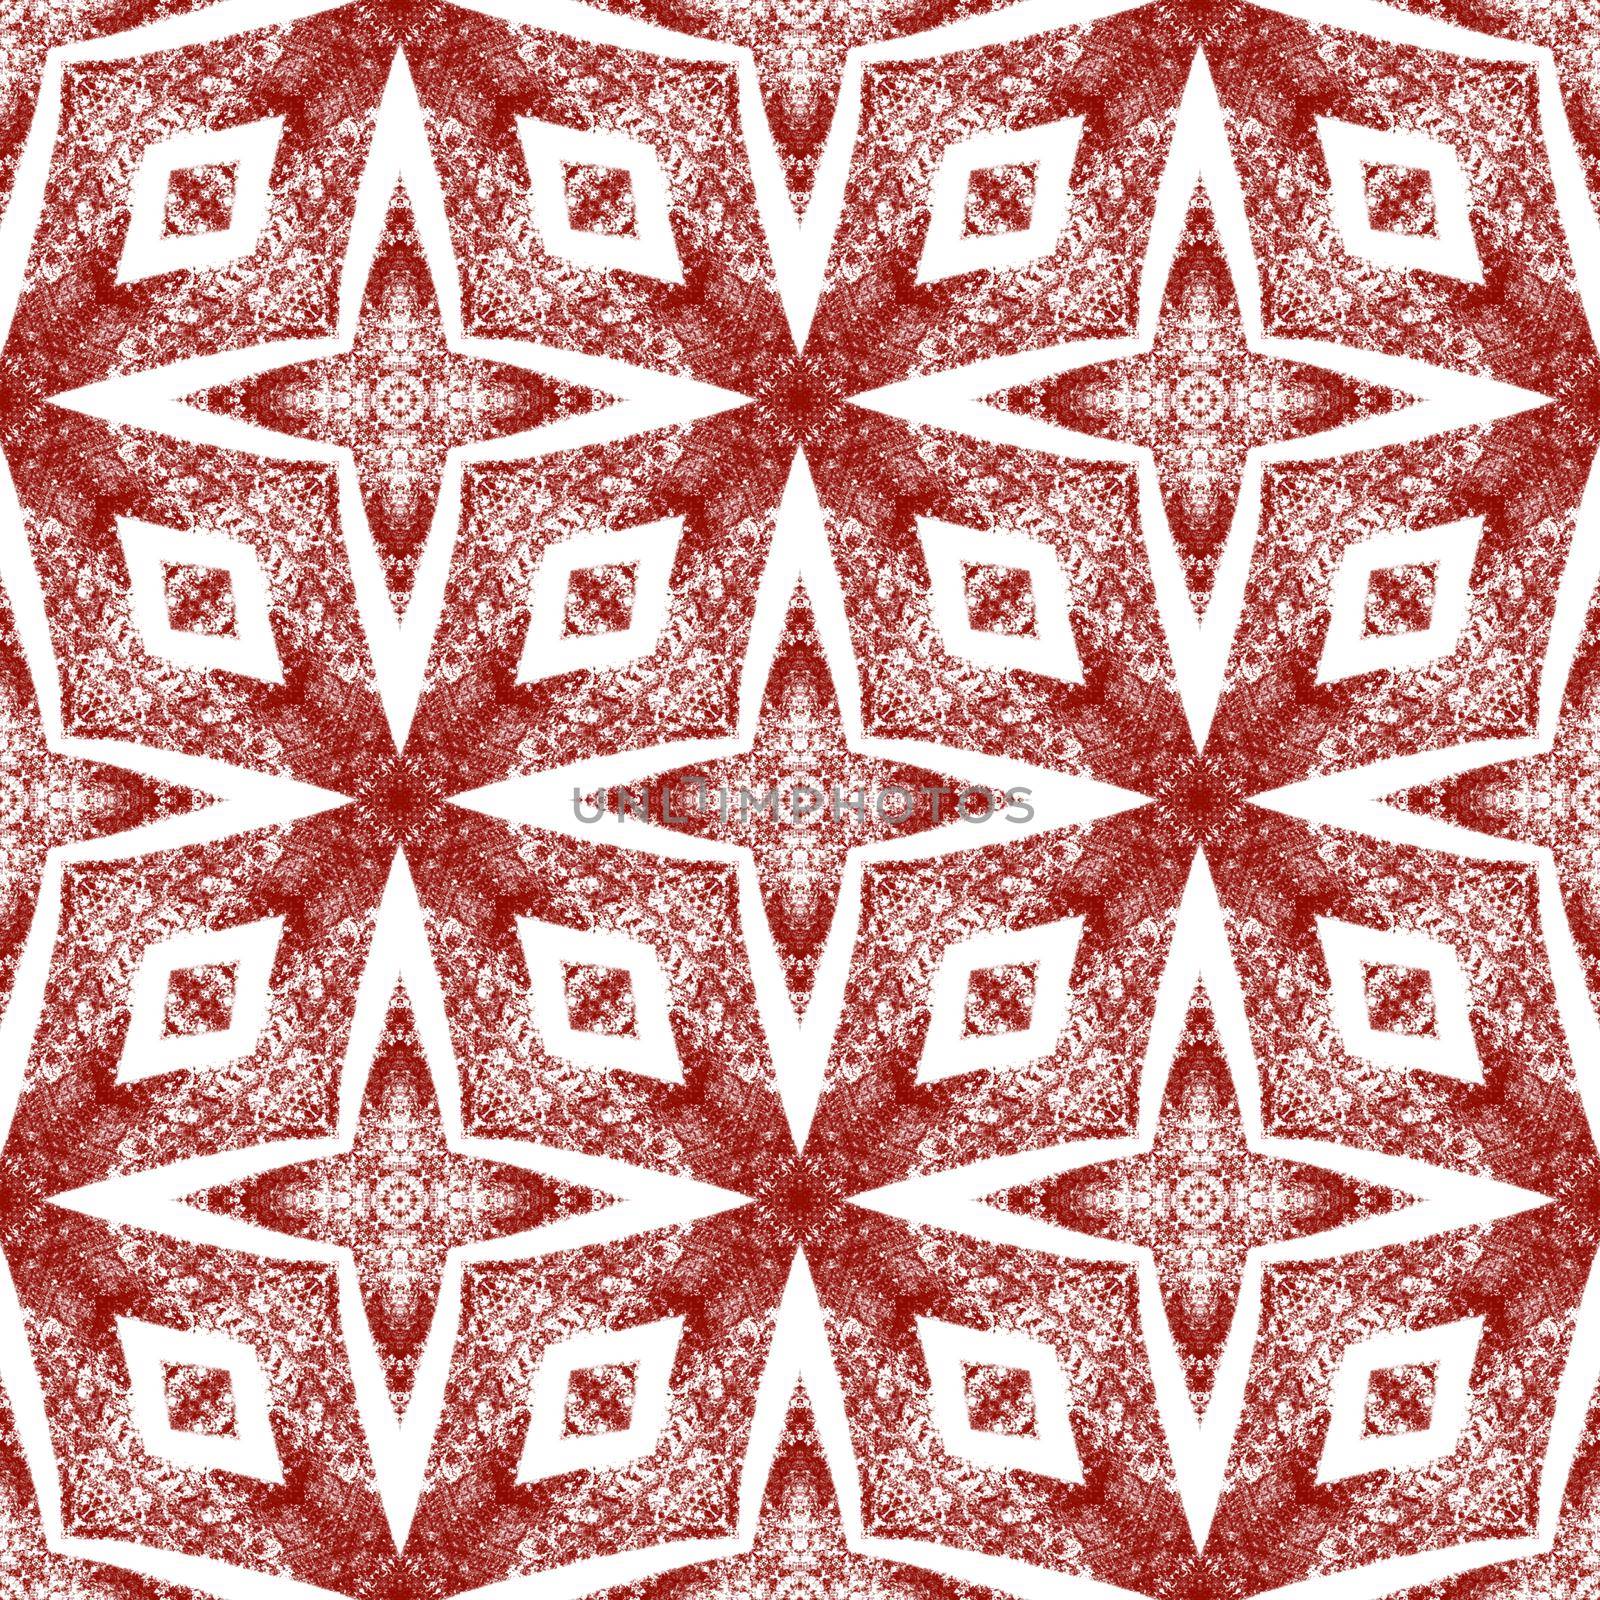 Mosaic seamless pattern. Wine red symmetrical by beginagain